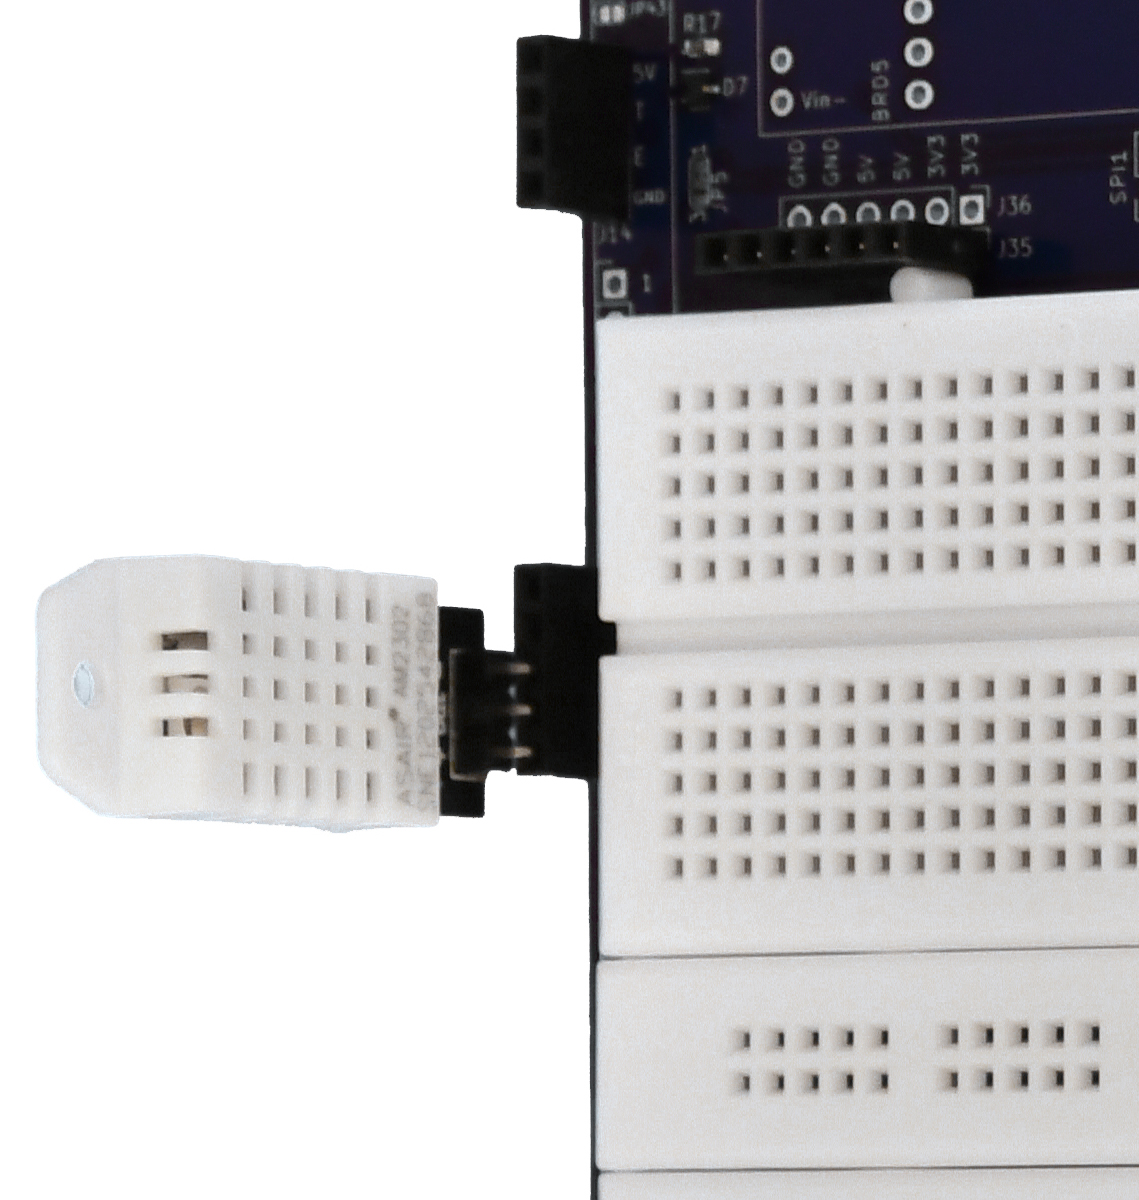 The DH22 sensor module plugged into the IoT Proto Shield Plus